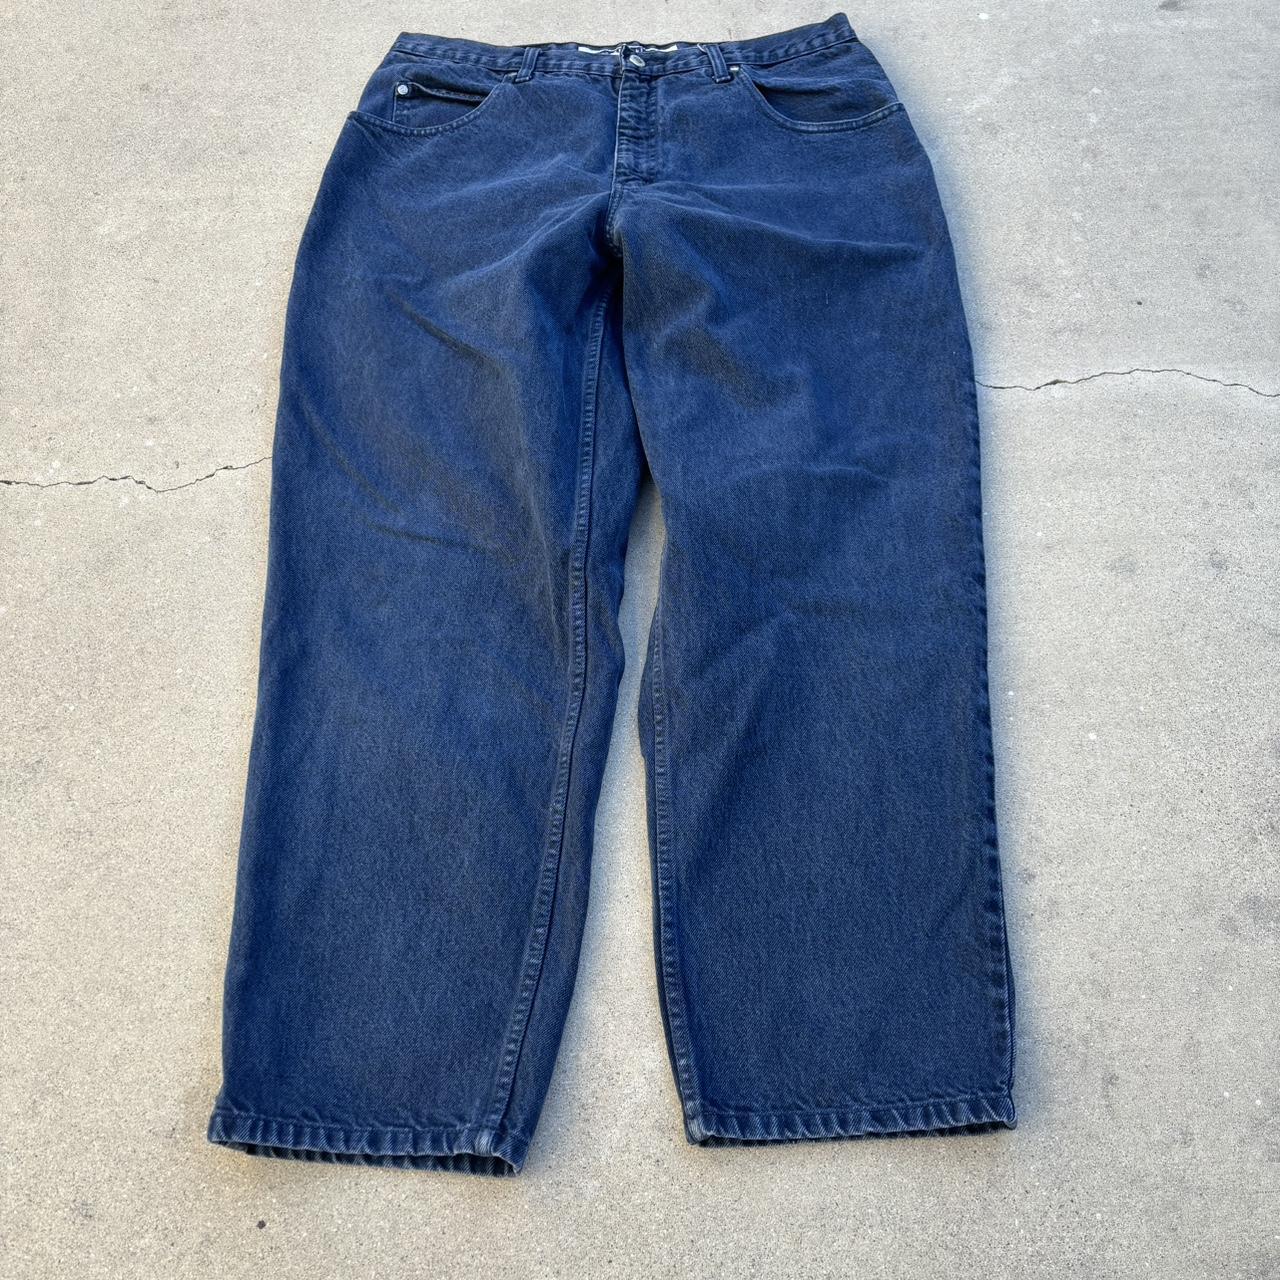 vintage anchor blue loose navy jeans $5 SHIPPING... - Depop